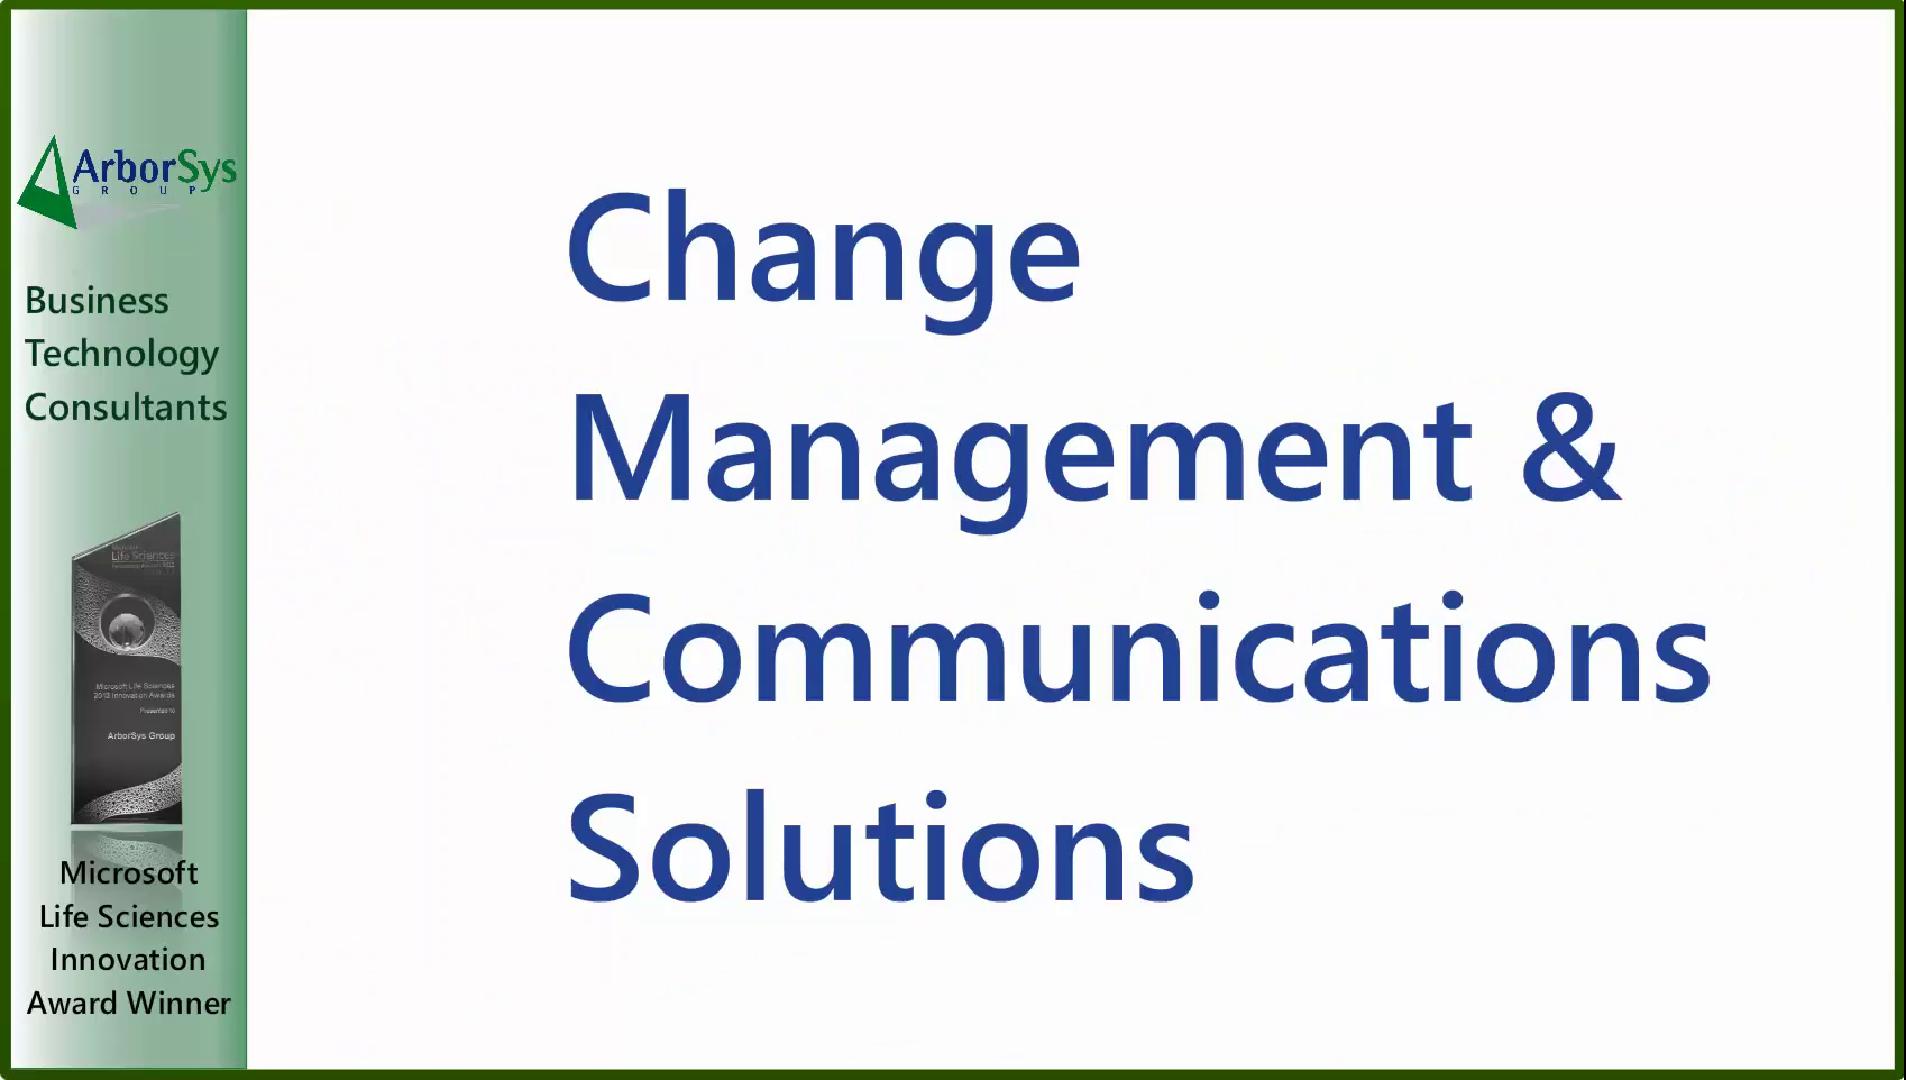 ArborSys Change Management Overview